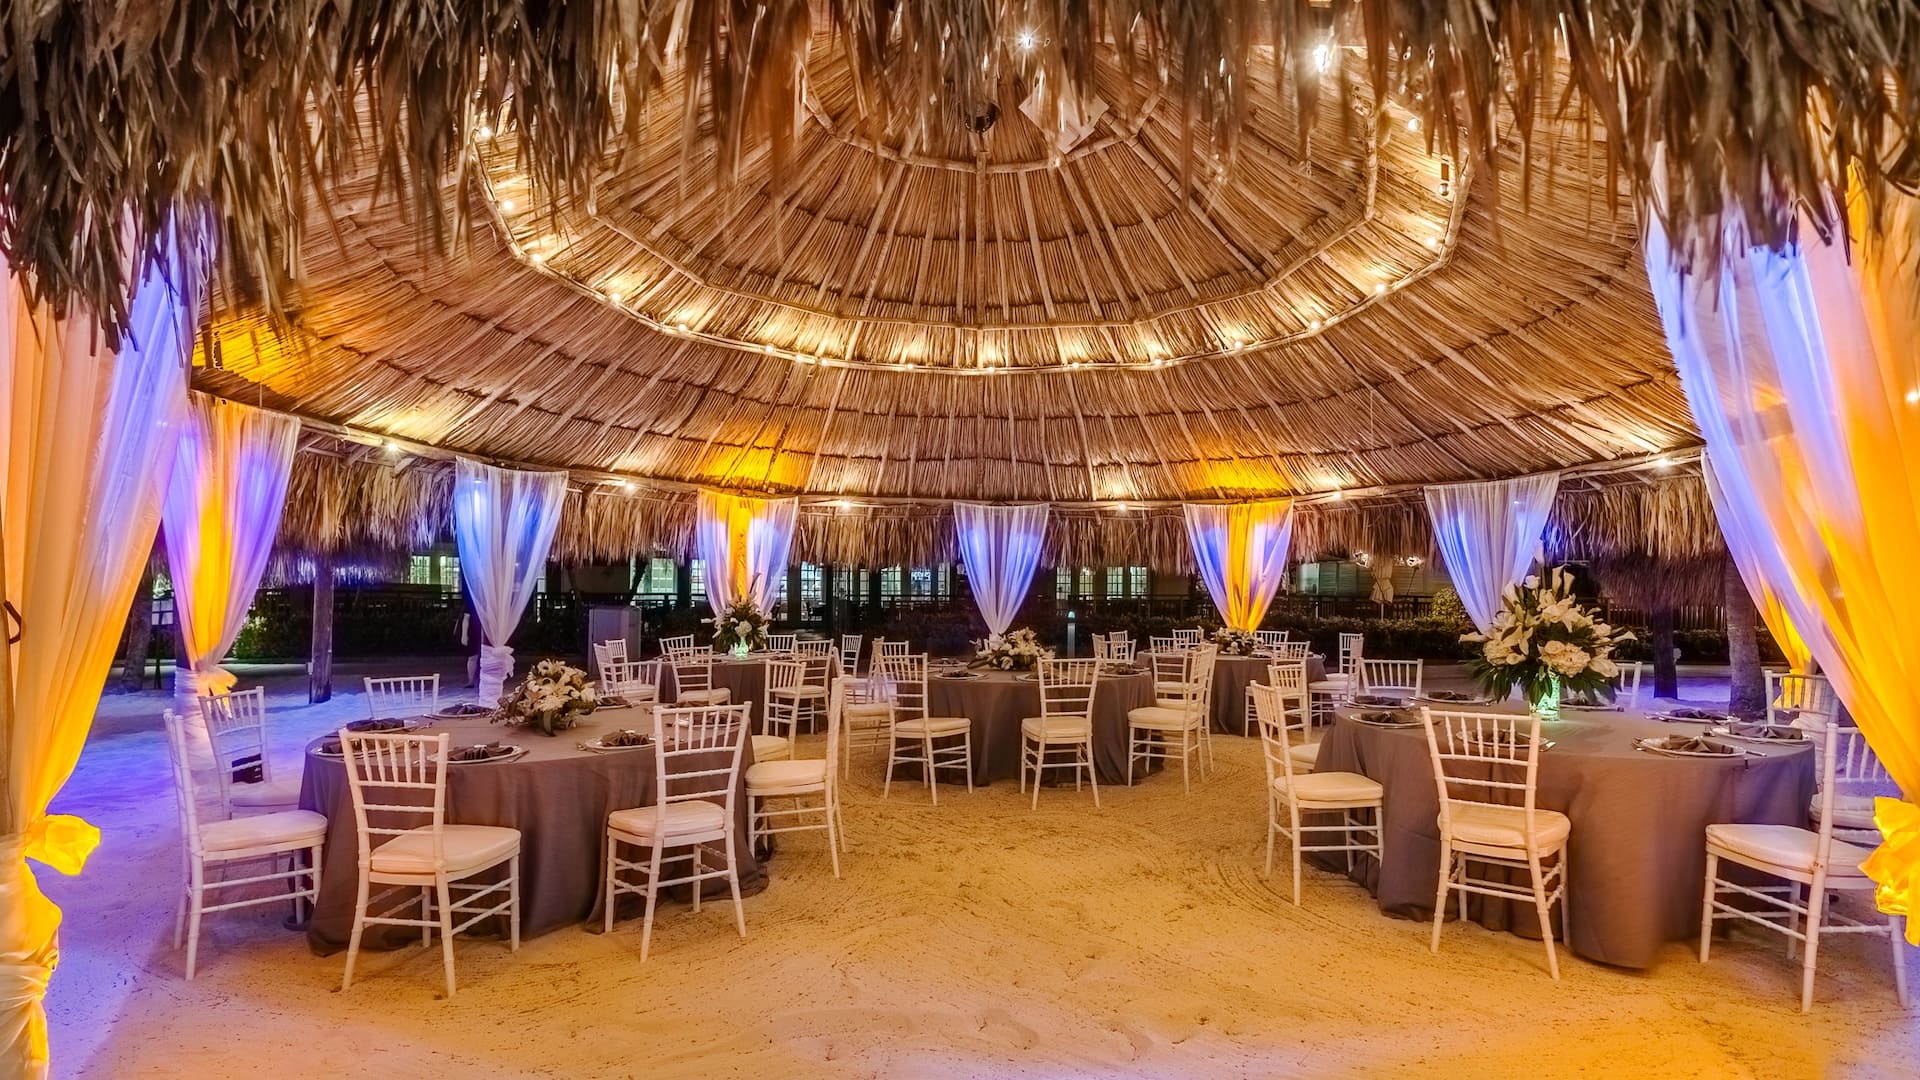 Image result for hyatt regency aruba resort and casino weddings